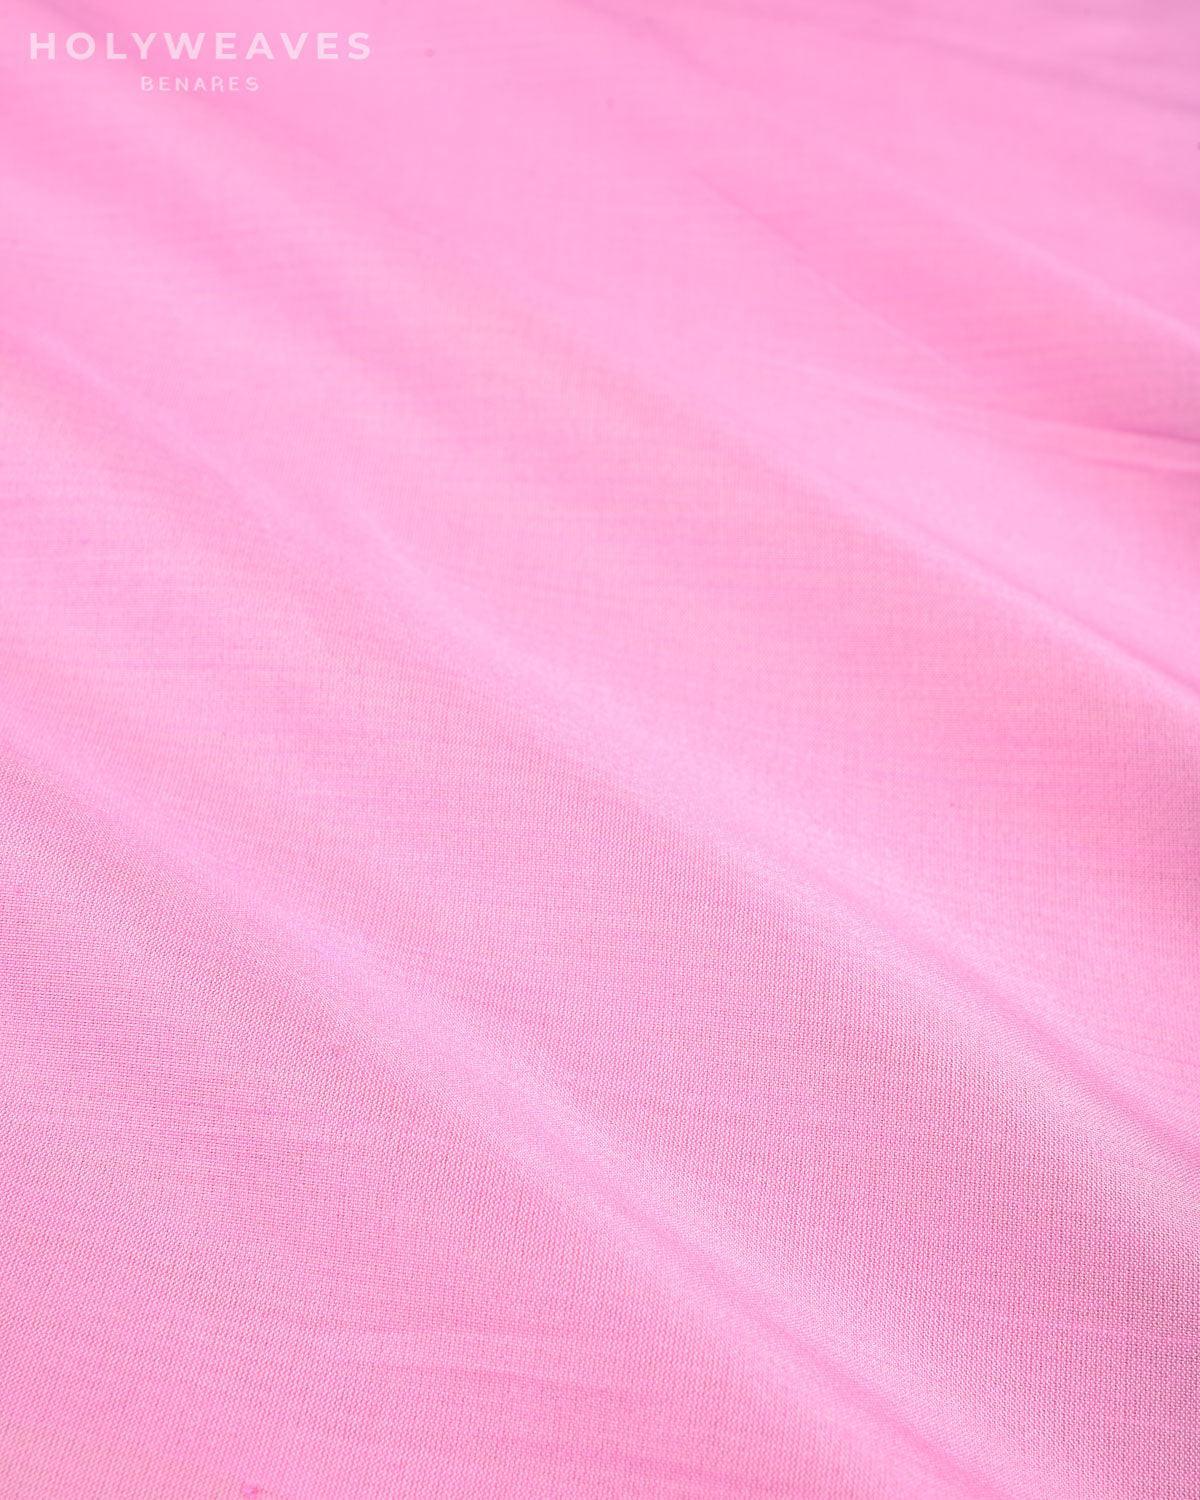 Flamingo Pink Banarasi Plain Woven Spun Silk Fabric - By HolyWeaves, Benares